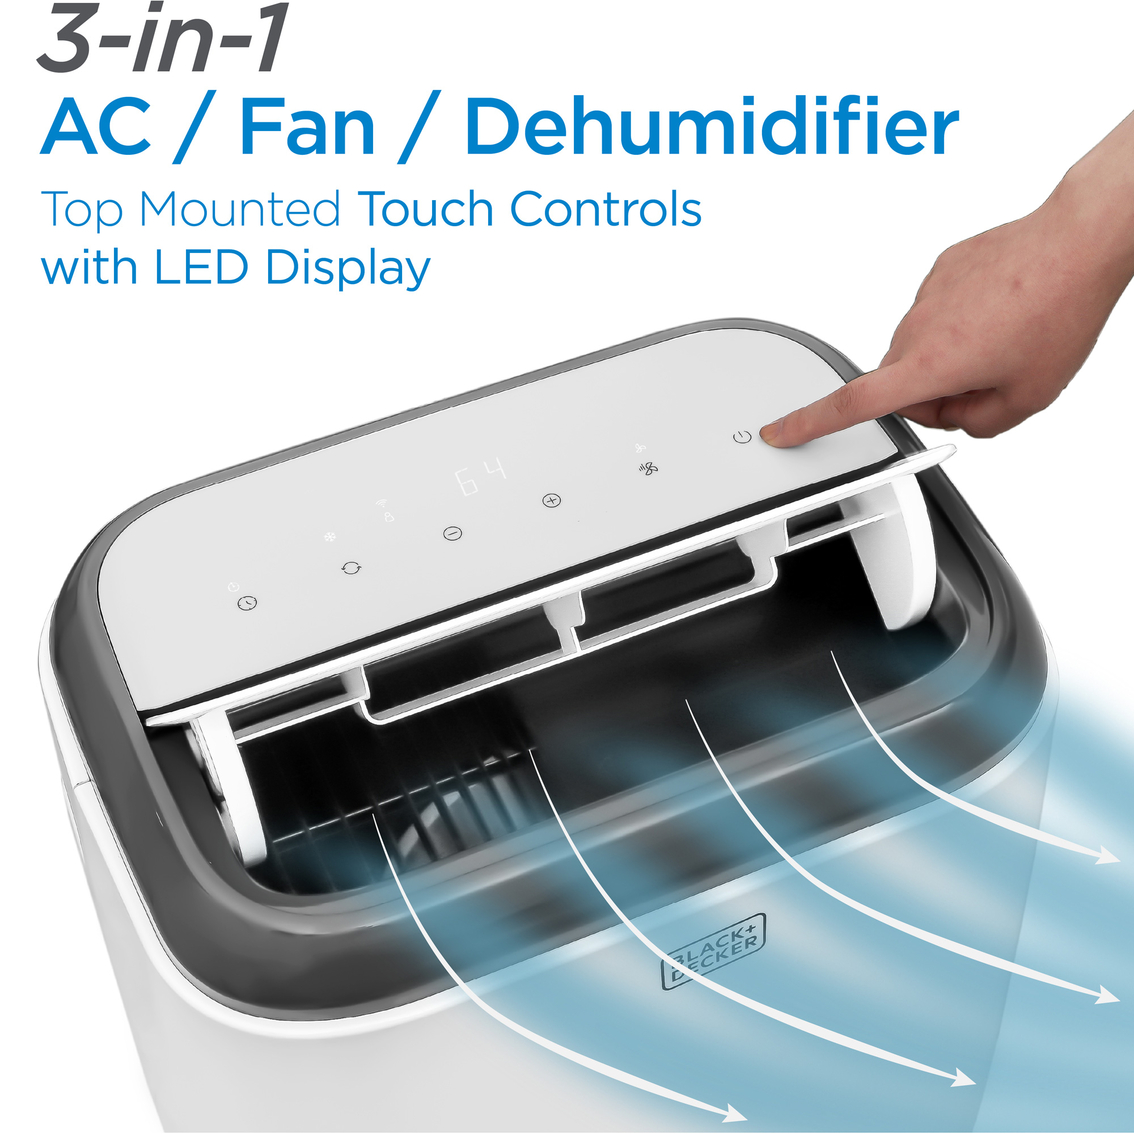 Black + Decker Portable Air Conditioner (10,000 BTU SACC/CEC) (14,000 BTU ASHRAE) - Image 3 of 7